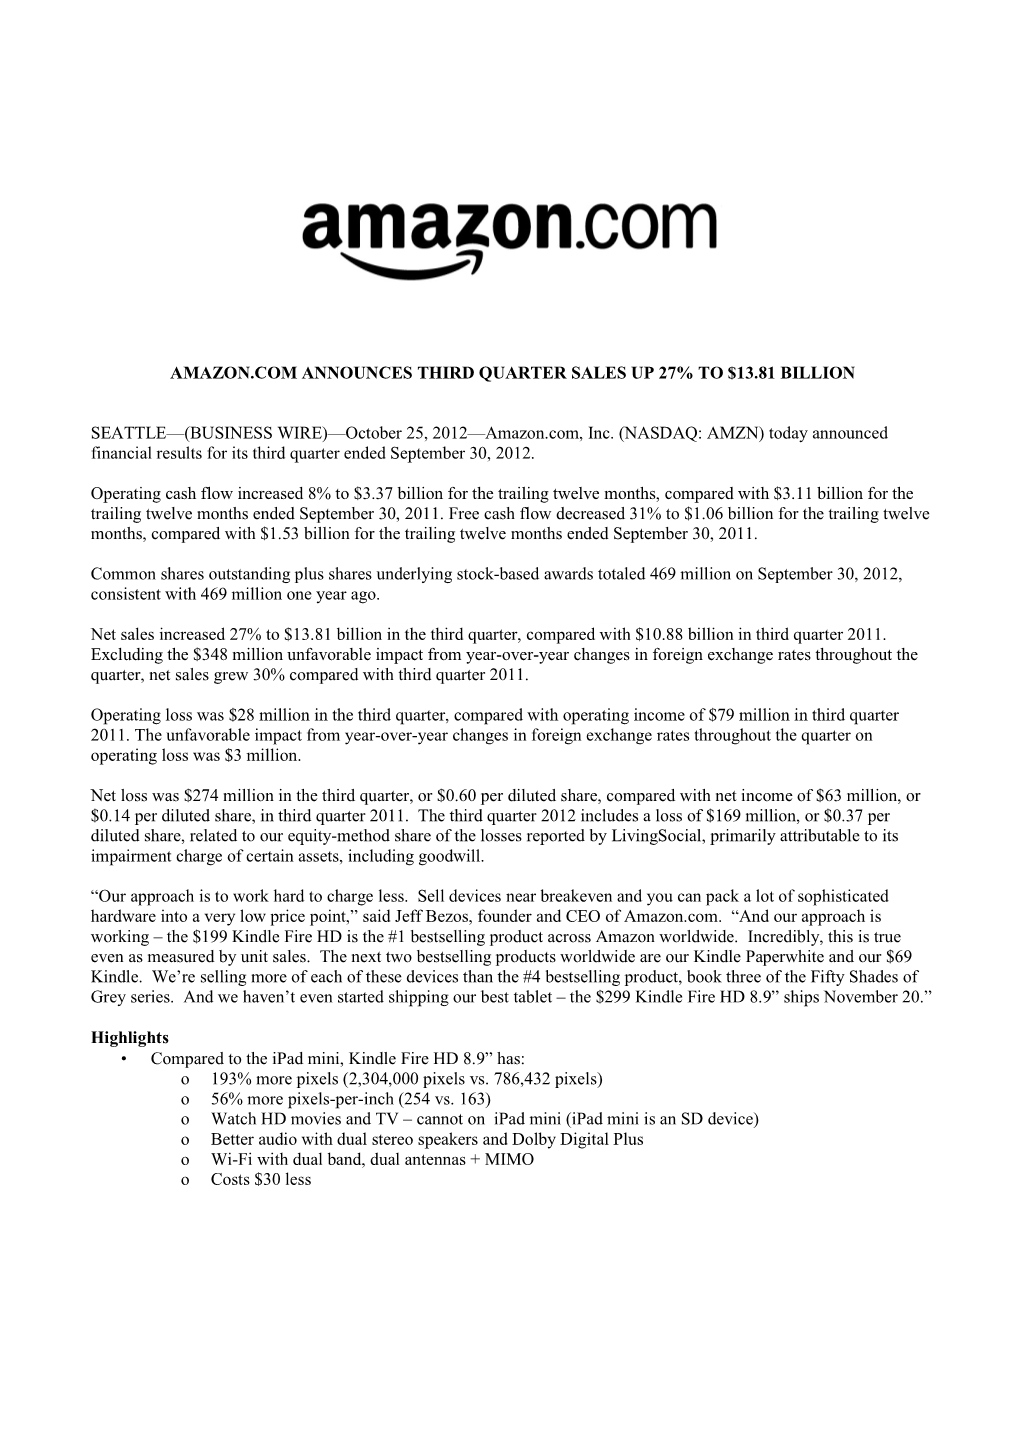 October 25, 2012—Amazon.Com, Inc